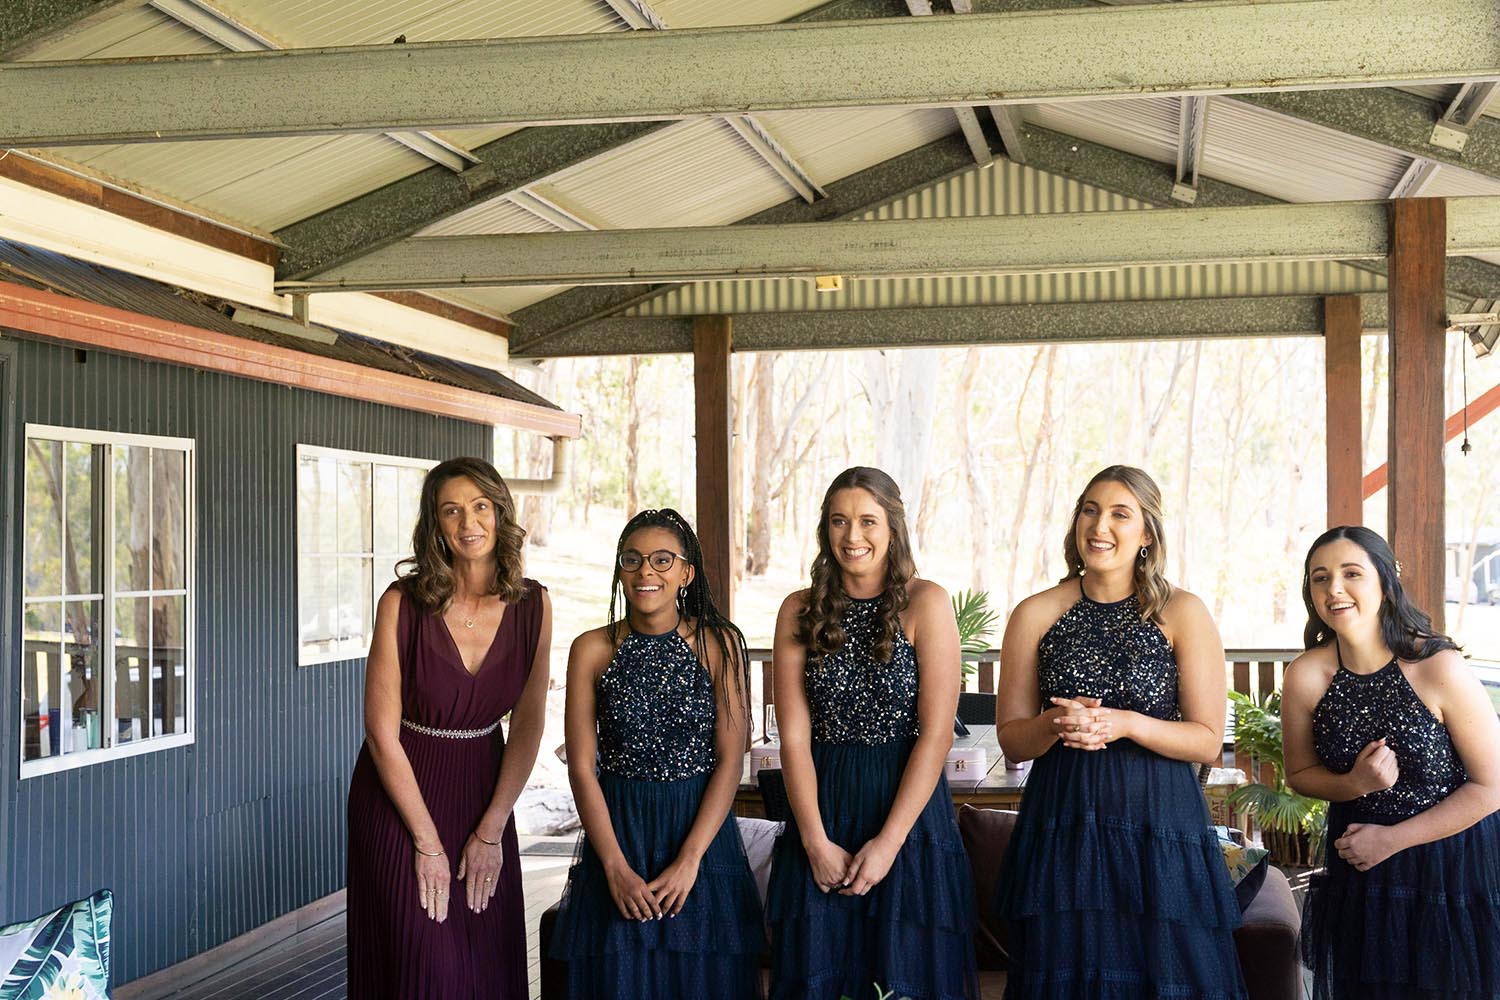 Wedding Photography - bridesmaids reactions to bride